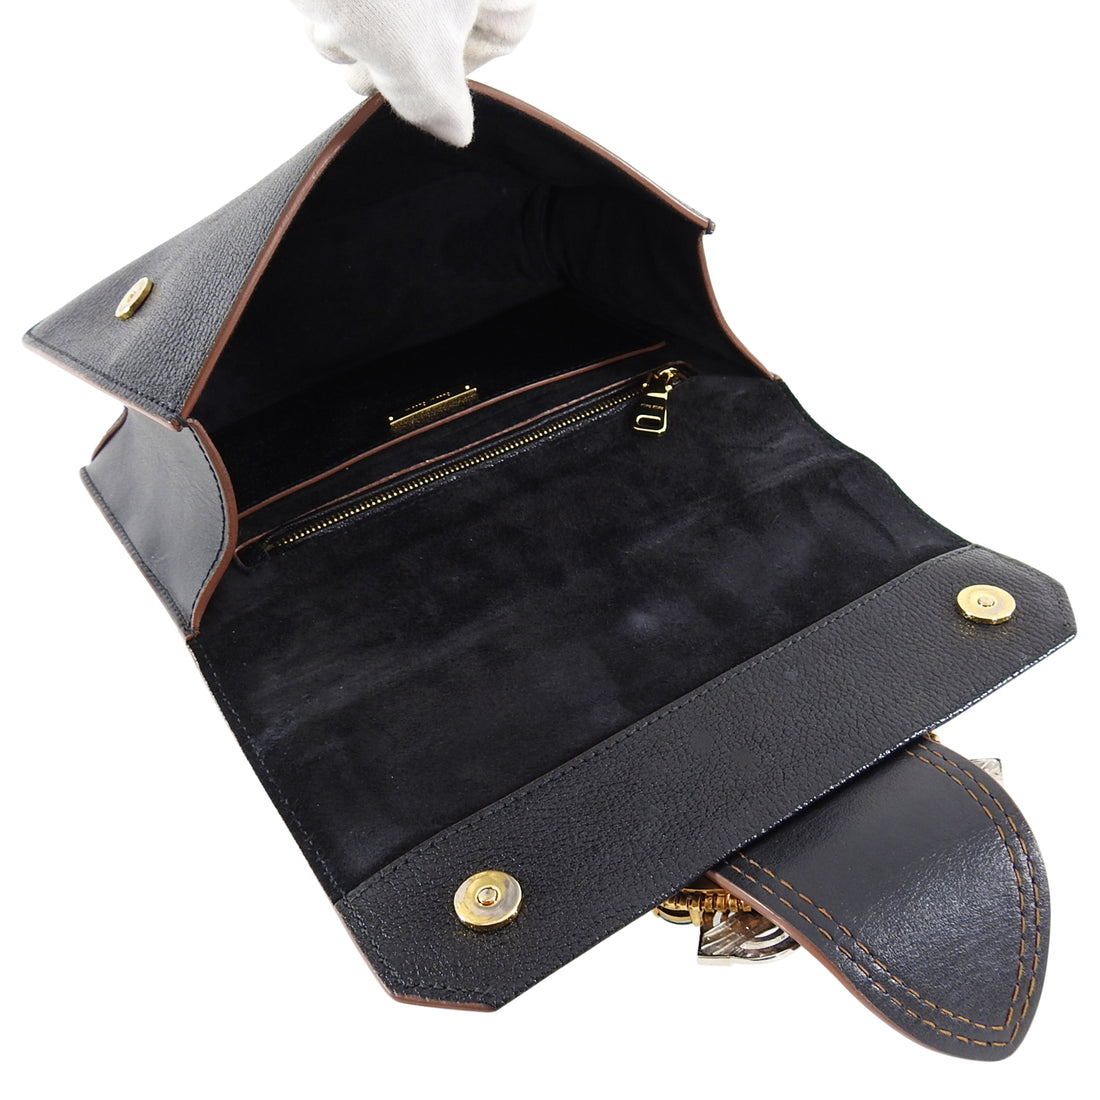 Cross body bags Miu Miu - Madras leather handbag - 5BA0462AJBF068ZVOOO